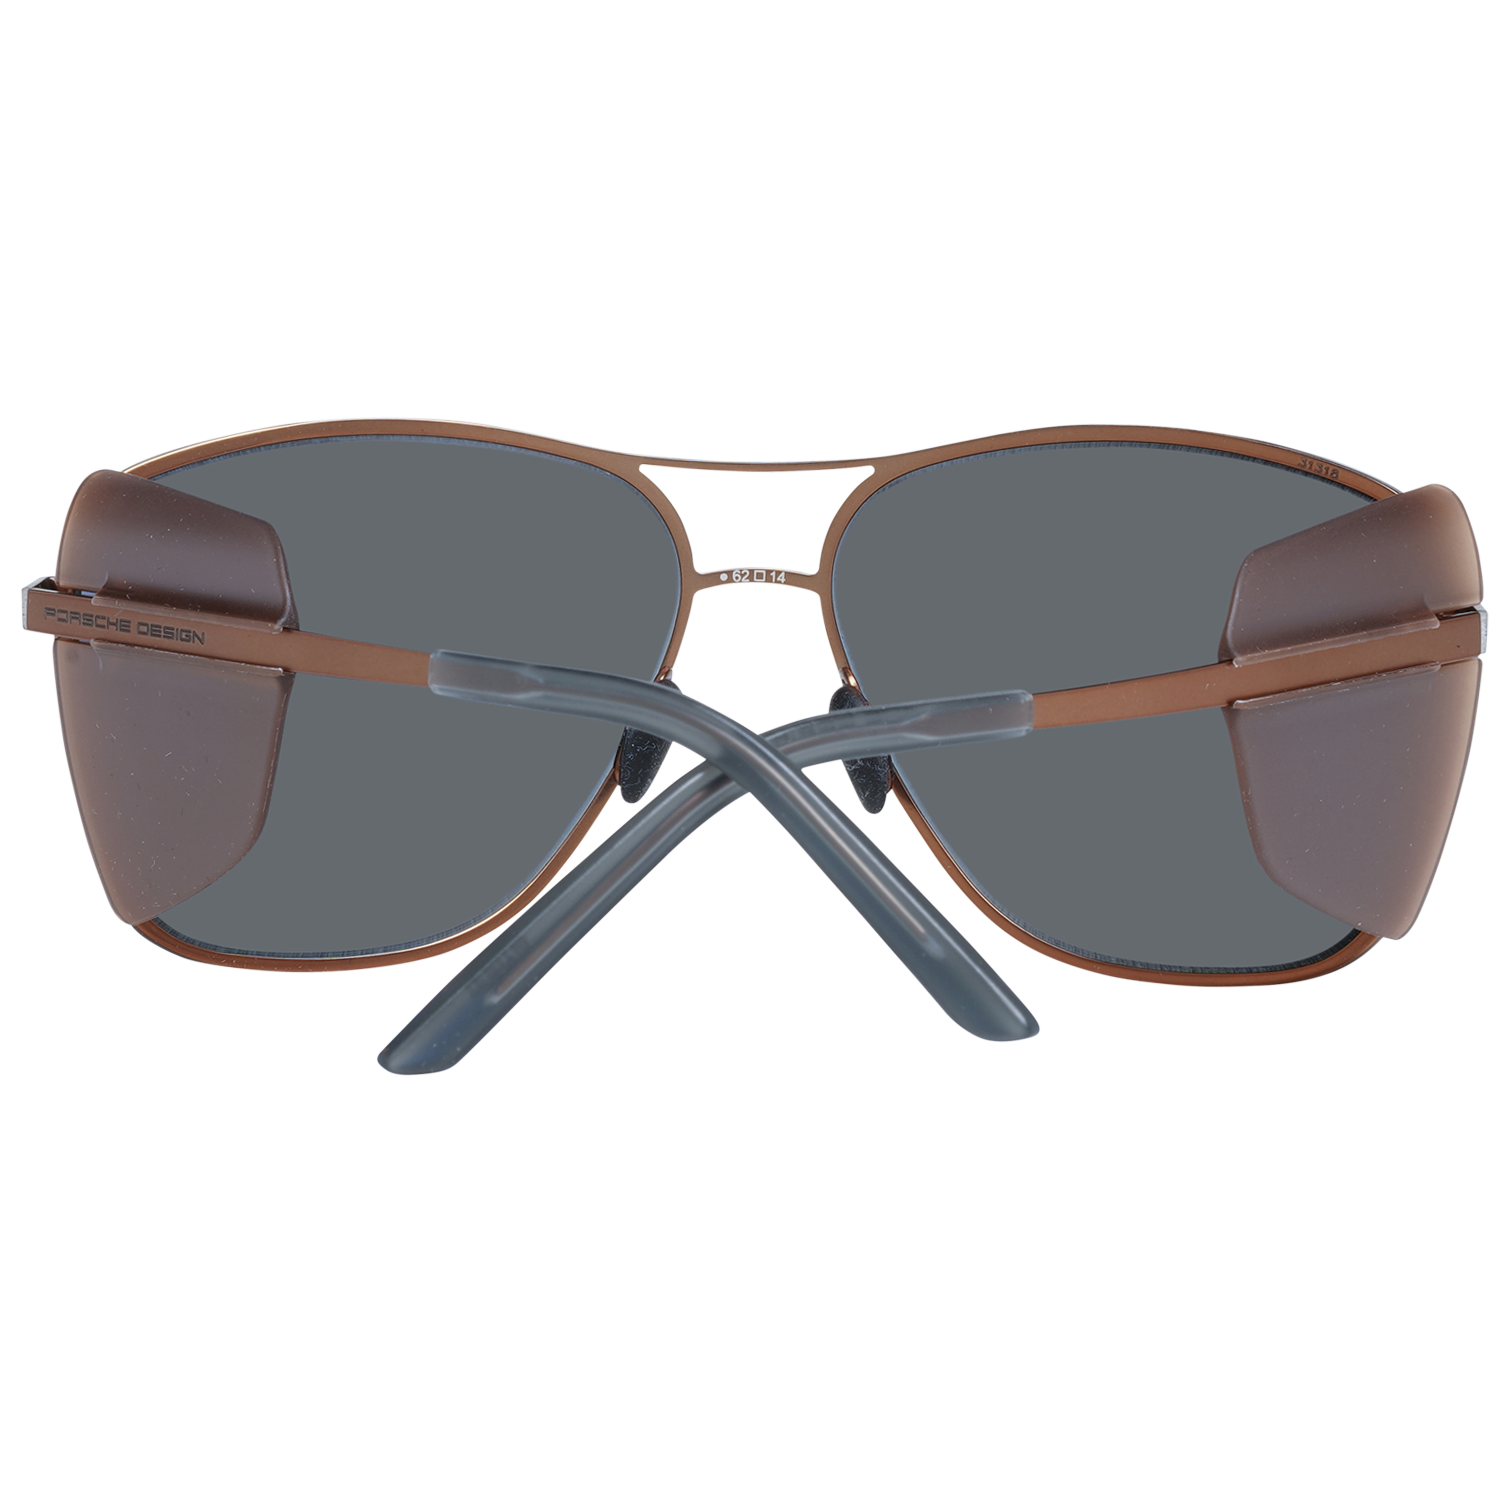 Porsche Design Sunglasses Porsche Design Sunglasses P8600 D 62 Titanium Eyeglasses Eyewear UK USA Australia 